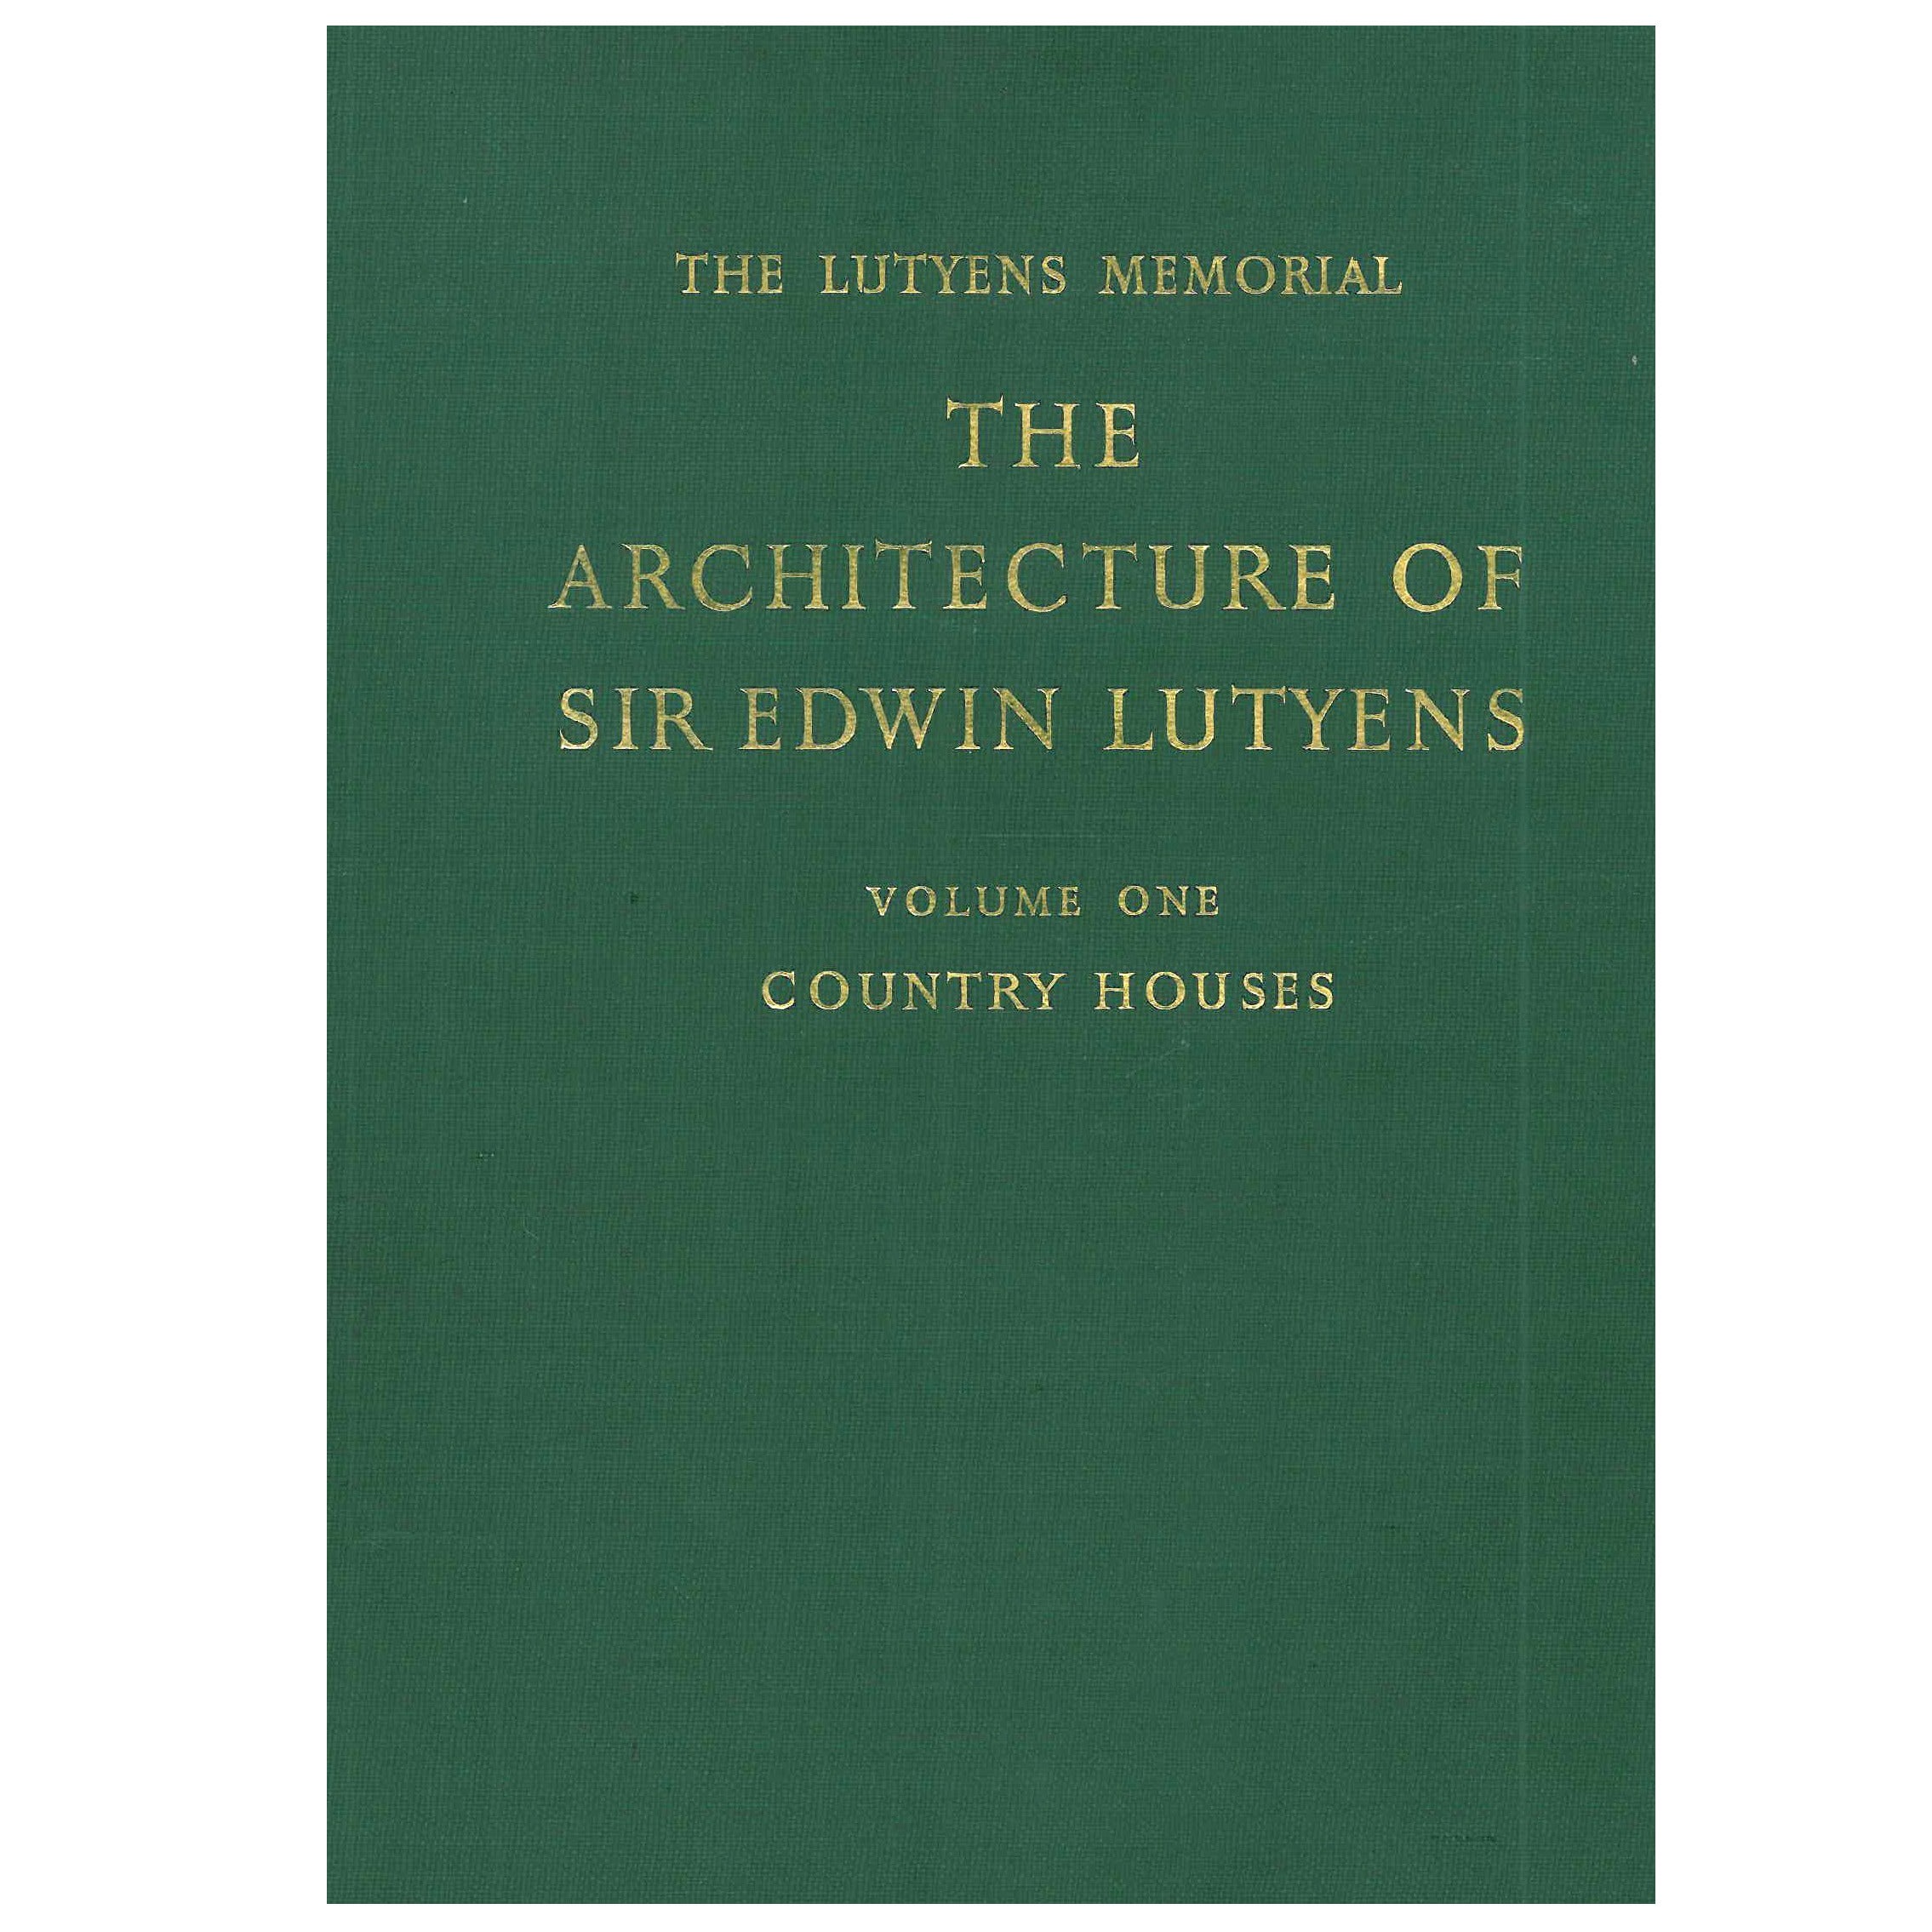 "The Architecture of Sir Edwin Lutyens" Books, The Lutyens Memorial Volumes